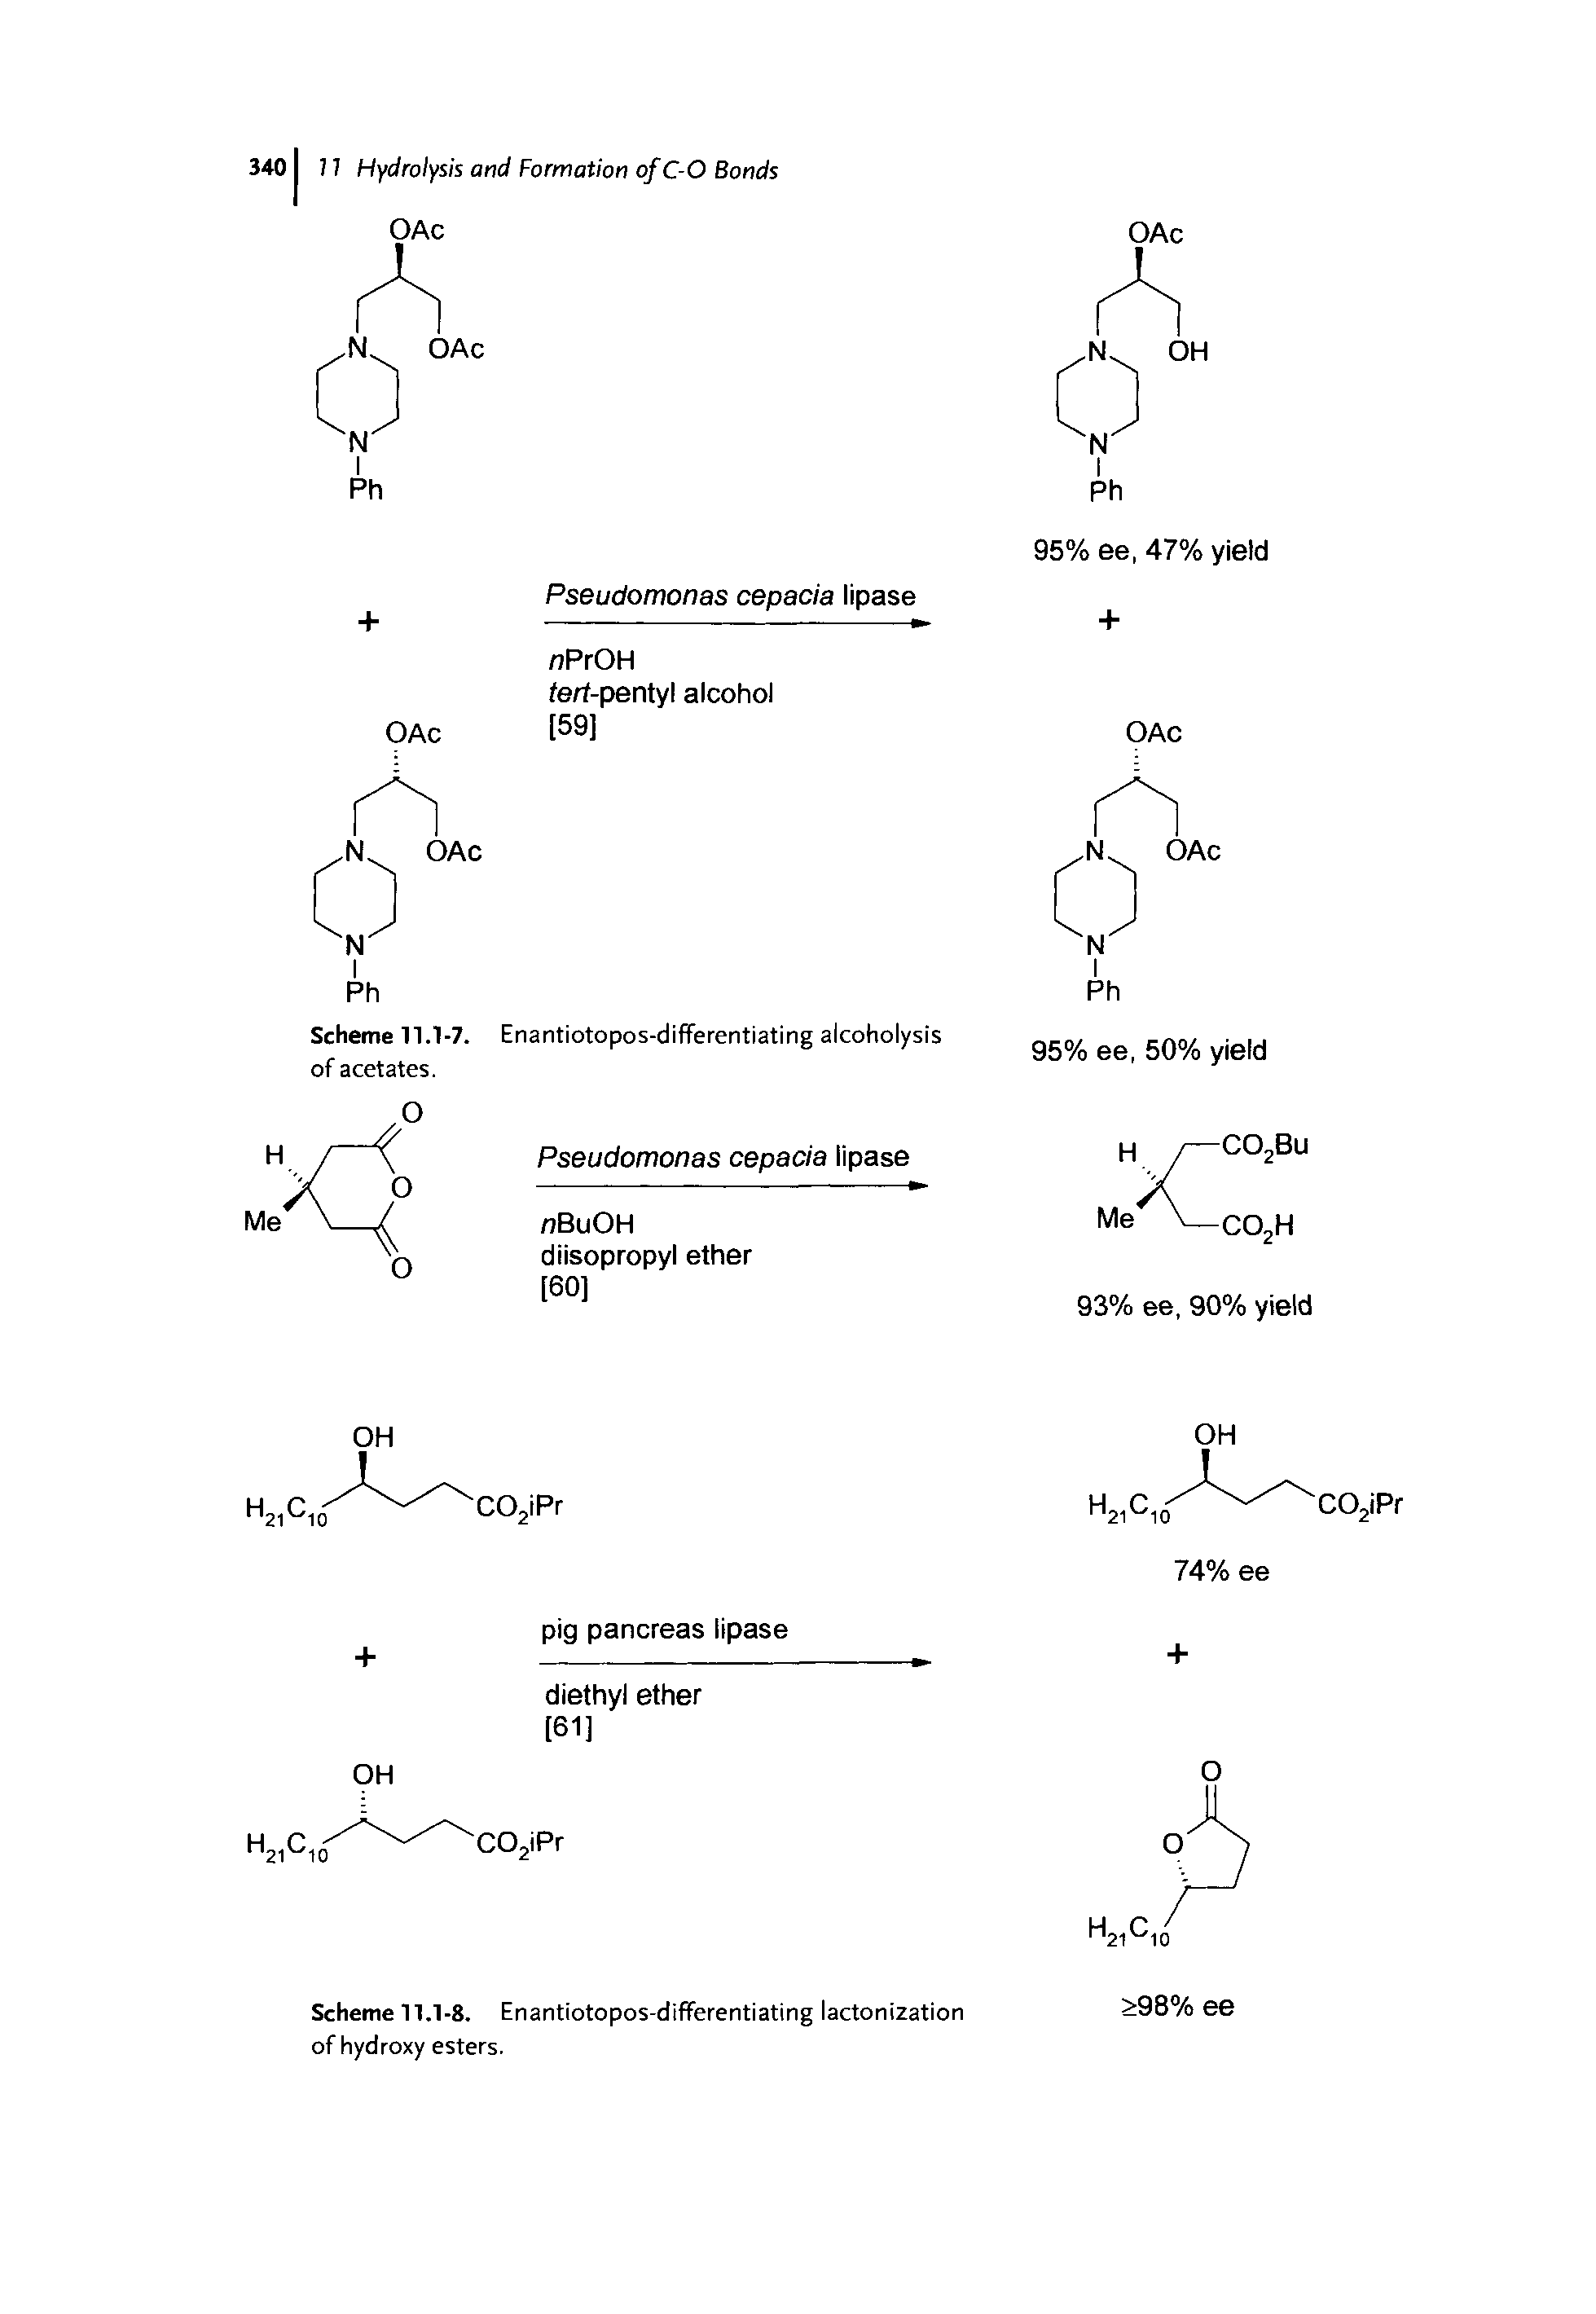 Scheme 11.1-8. Enantiotopos-differentiating lactonization of hydroxy esters.